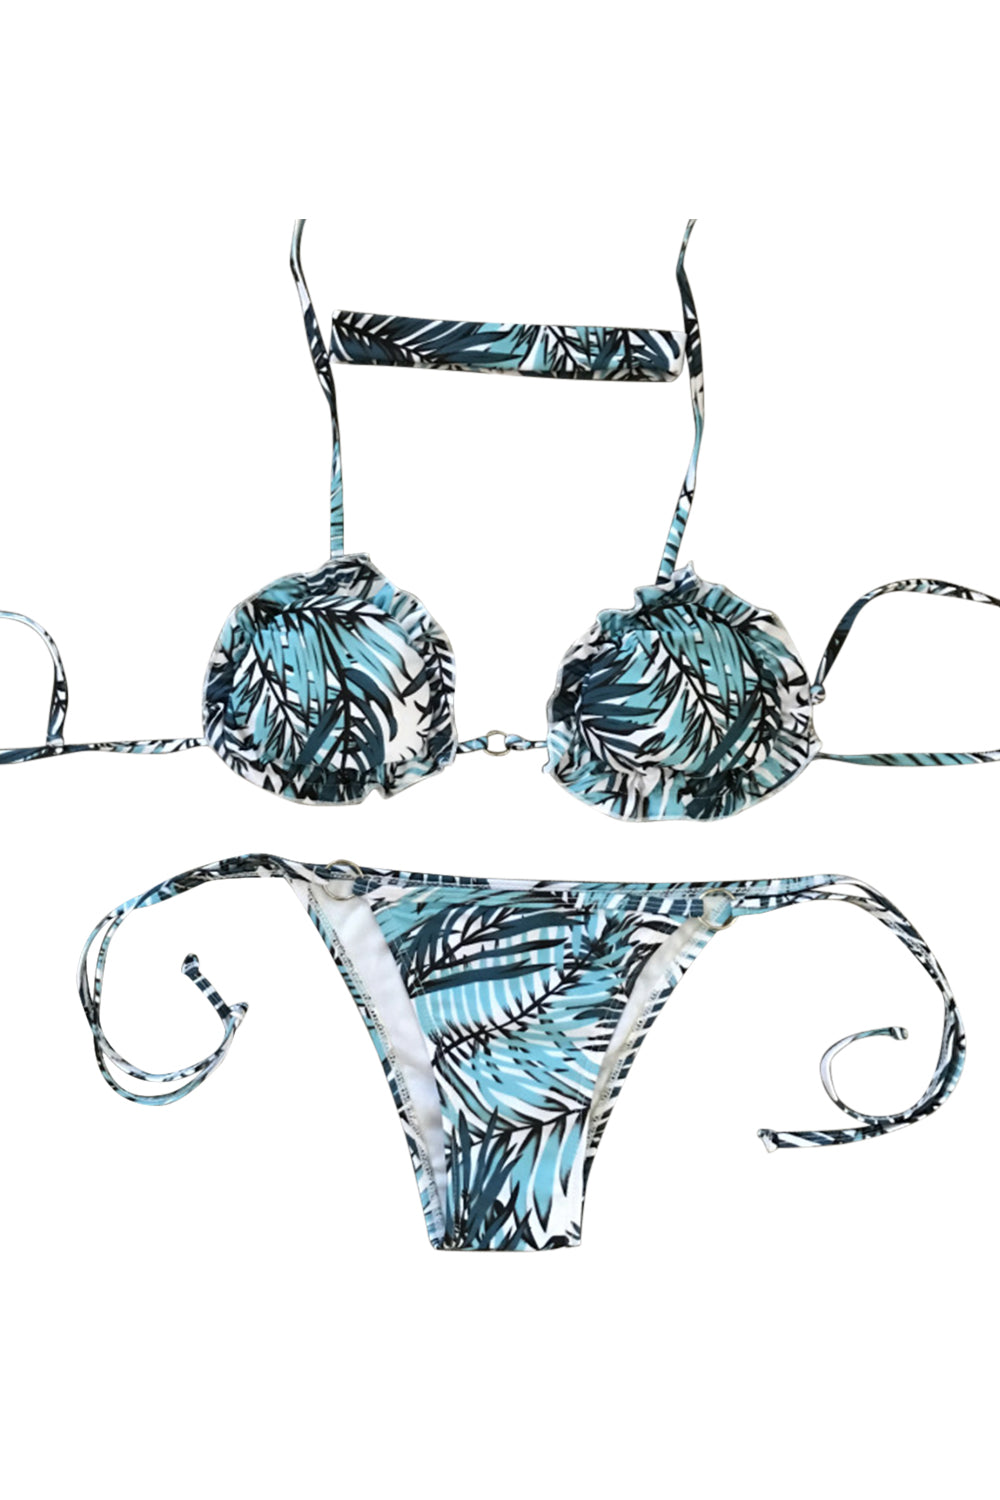 Iyasson Tropical Forest Leaves Print Ruffle Bikini Set